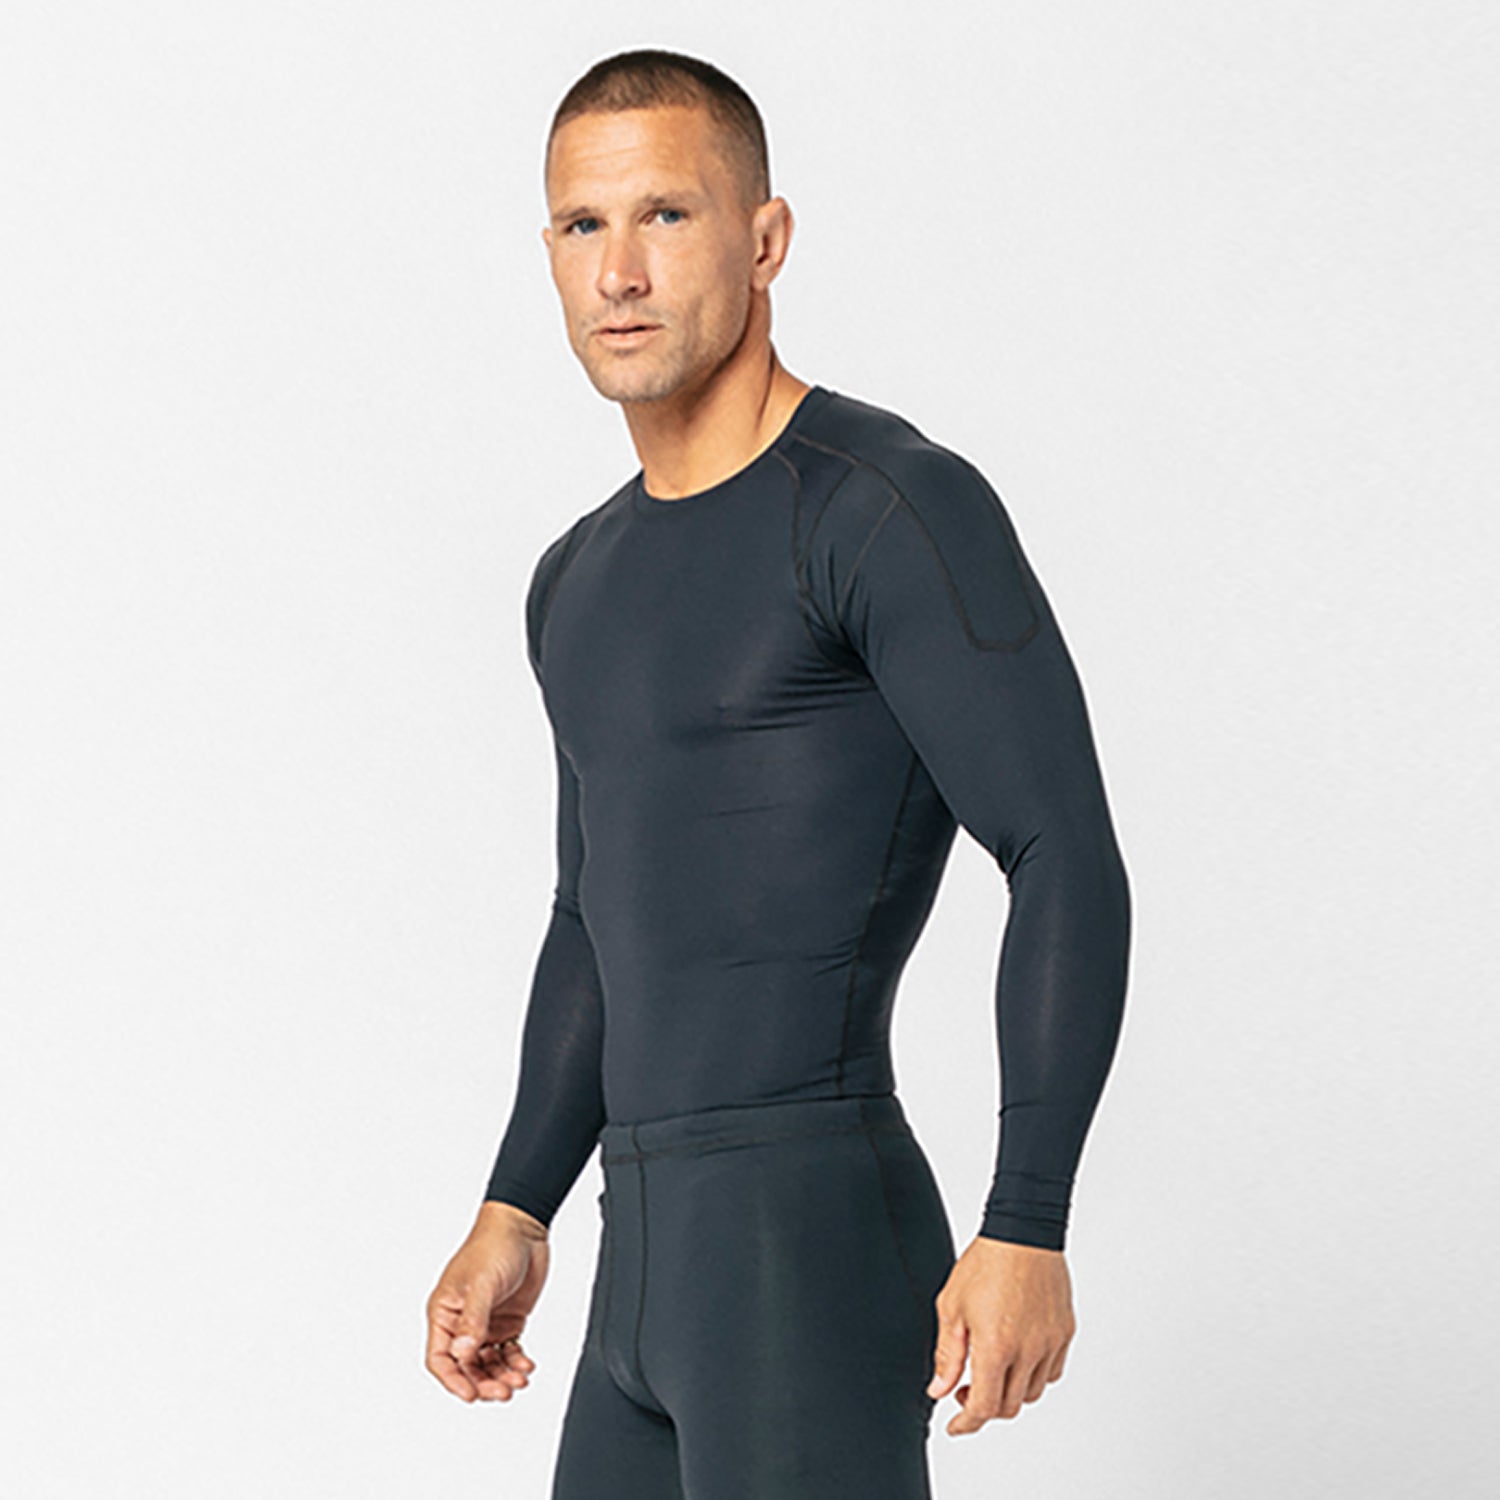 Black Long Sleeve Thermal Shirt Men Compression Shirts Athletic